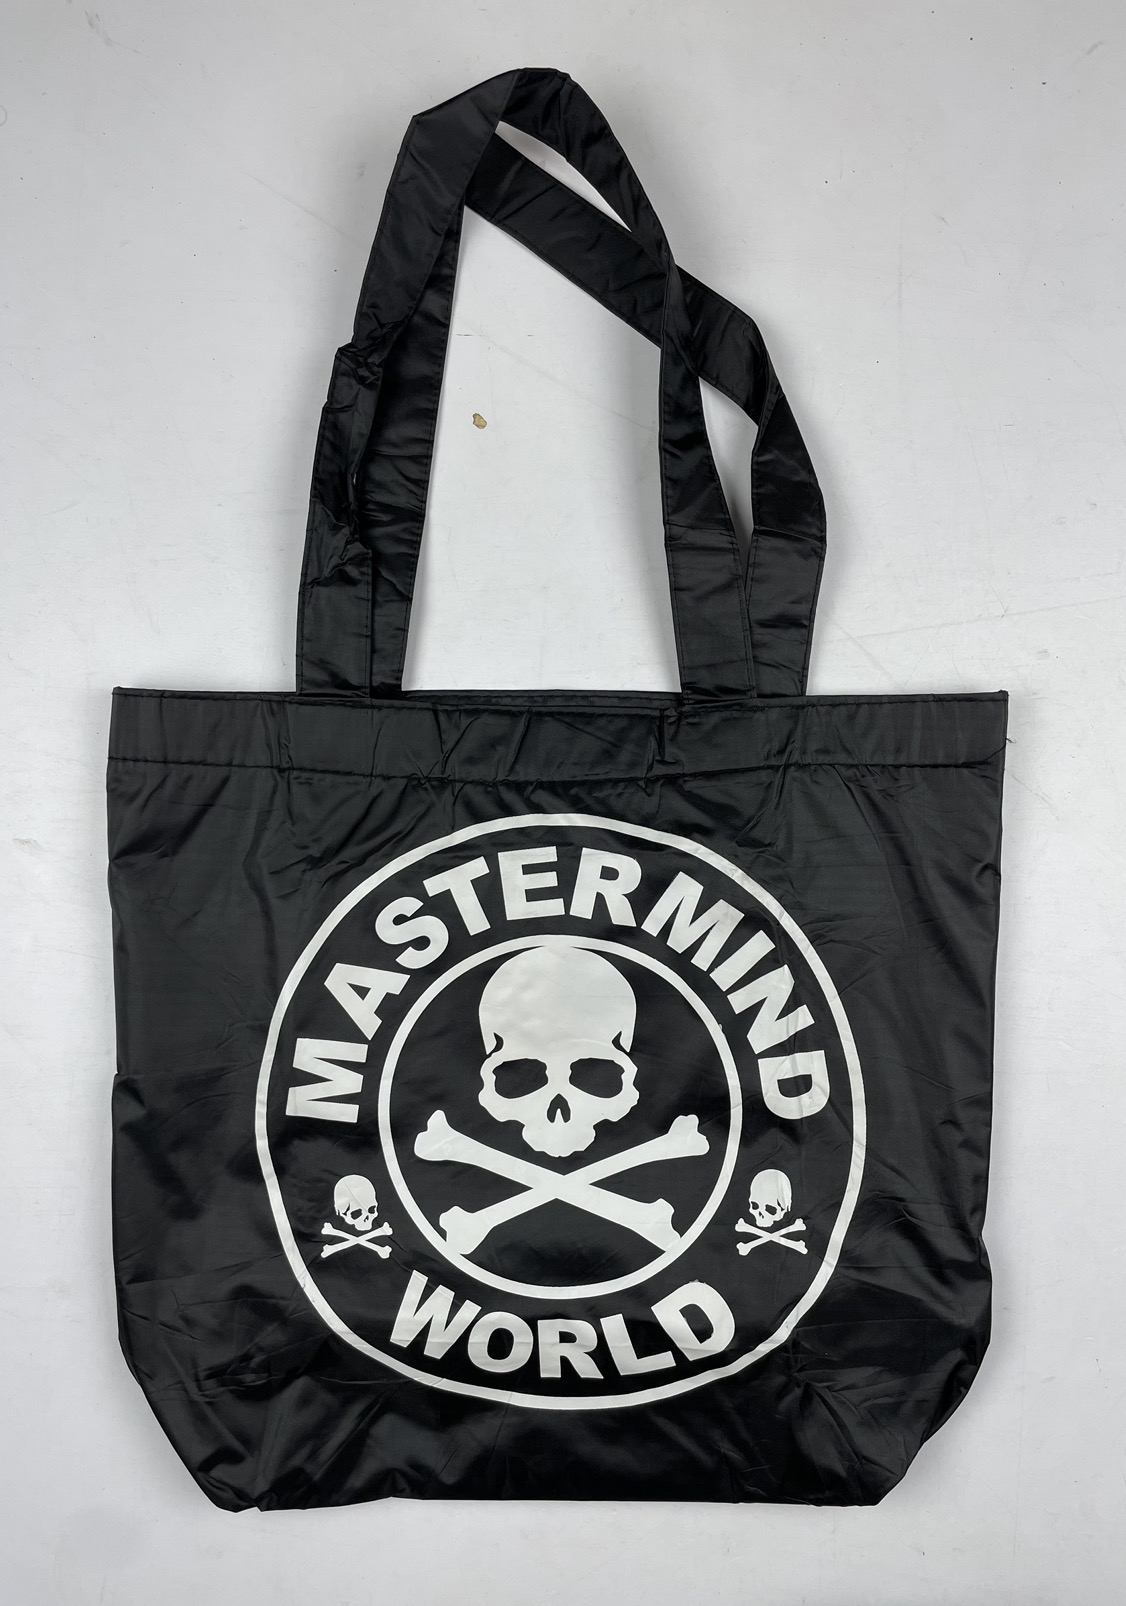 mastermind world tote bag tg3 - 1